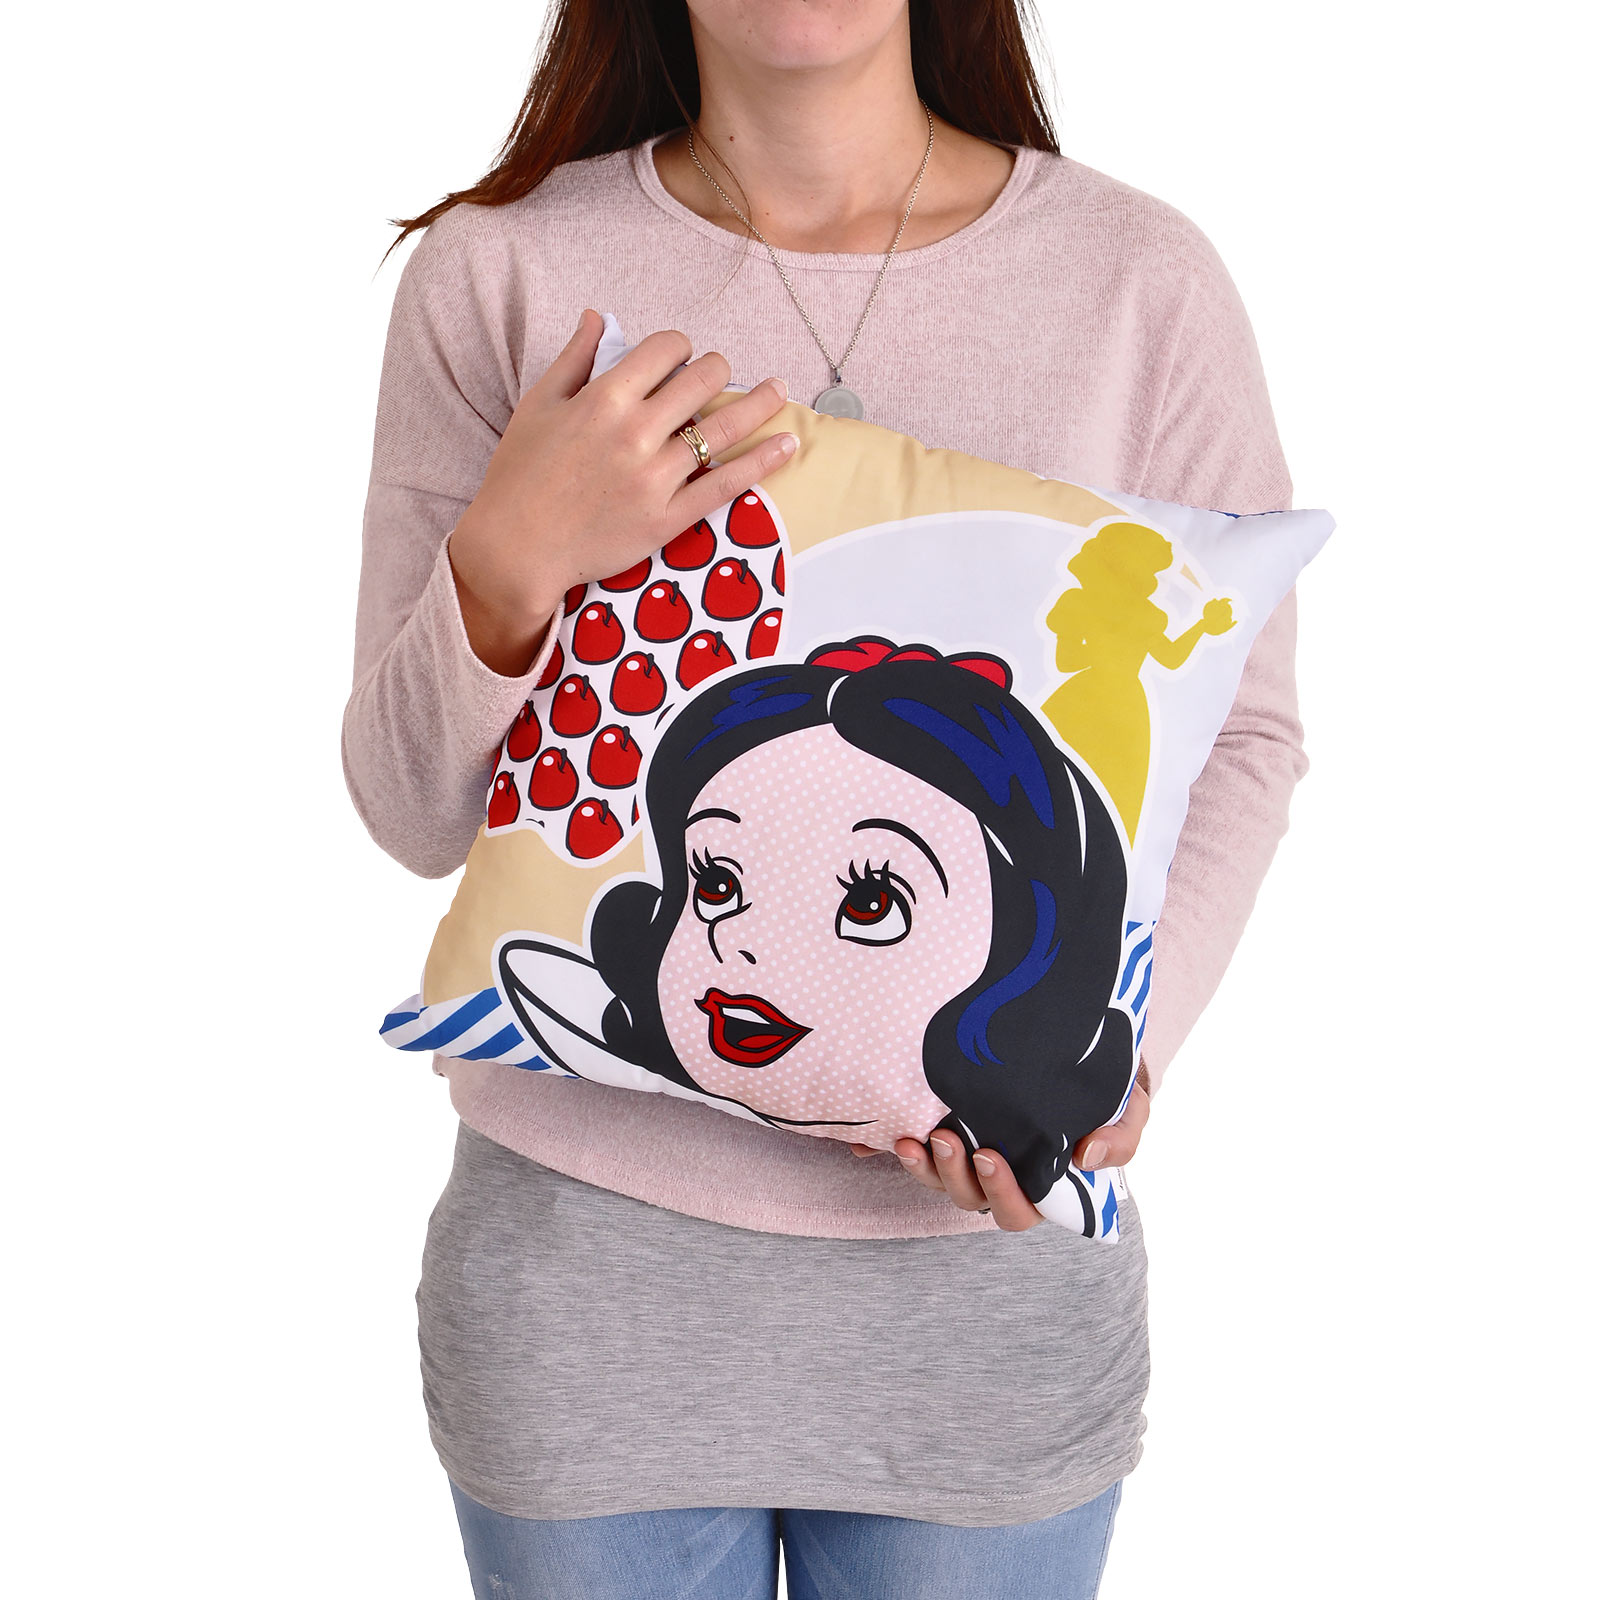 Snow White Pop-Art Pillow